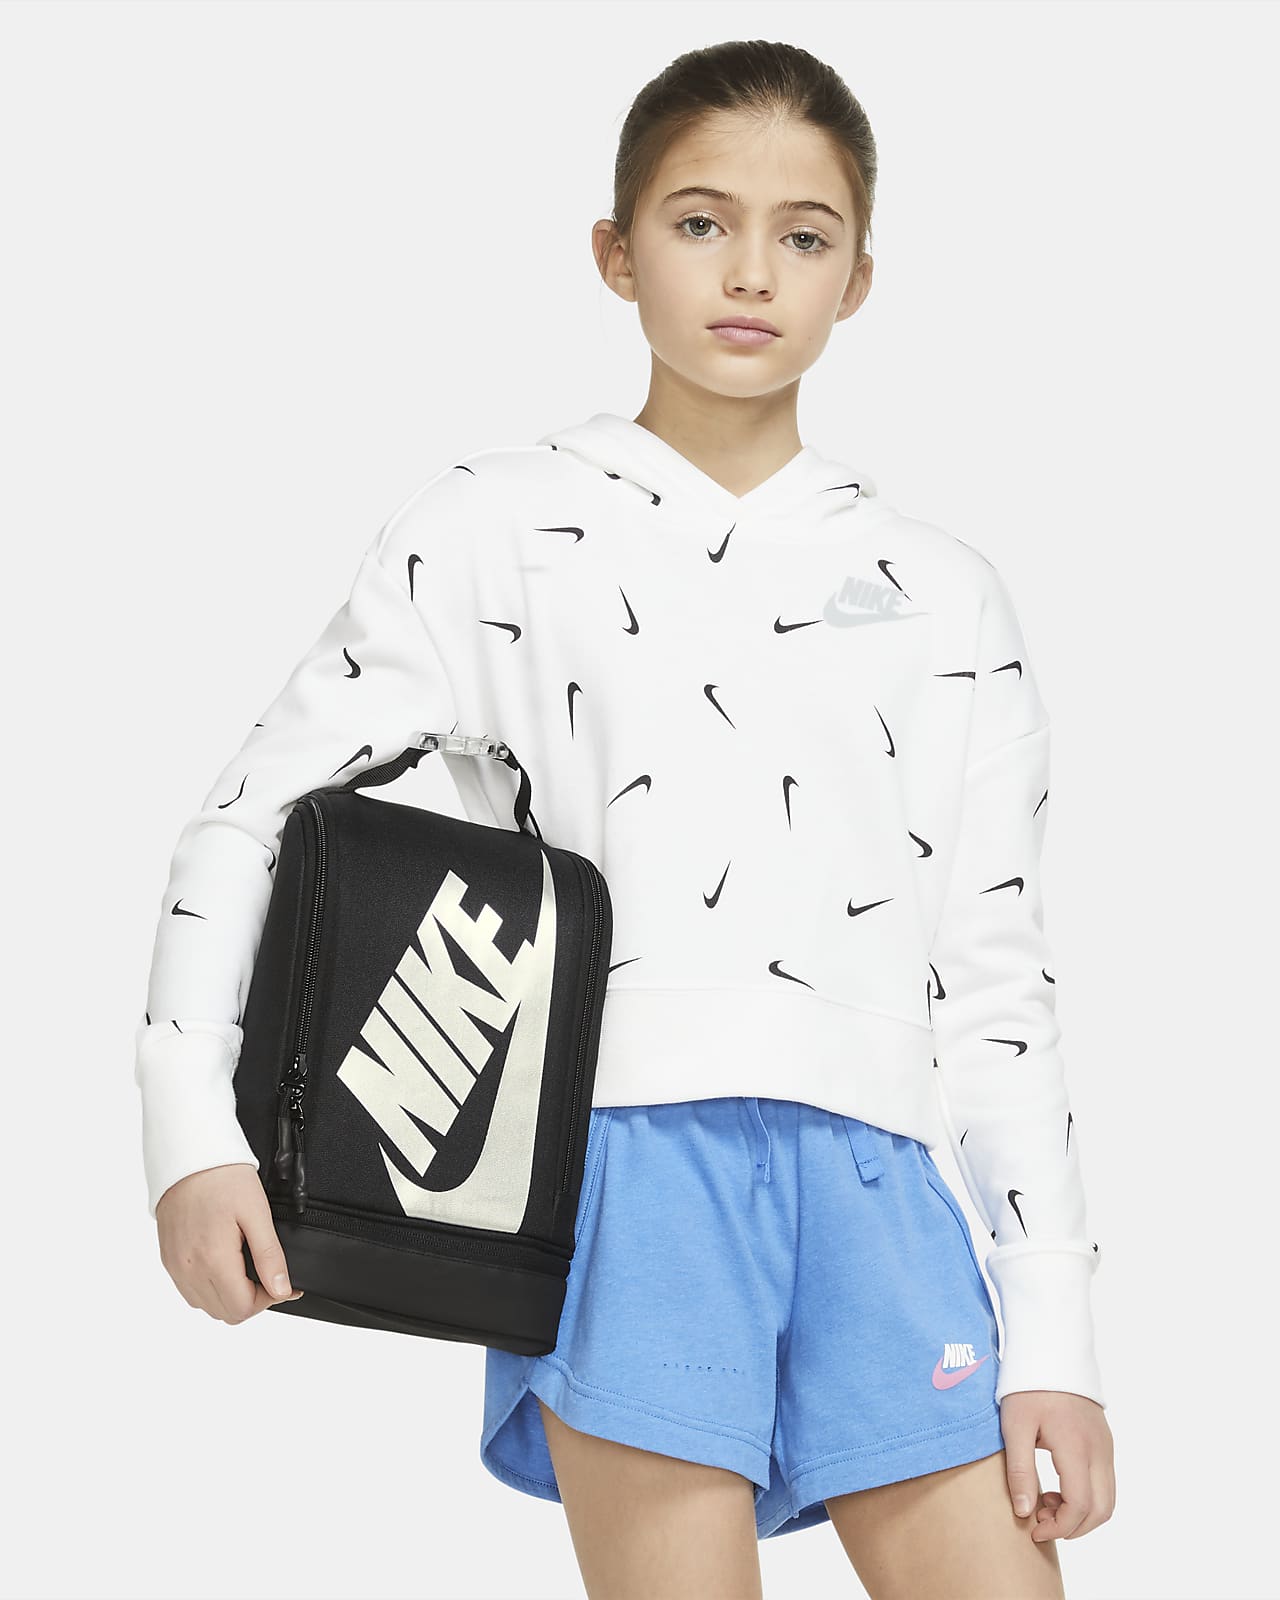 Nike Fuel Pack Kids' Lunch Bag